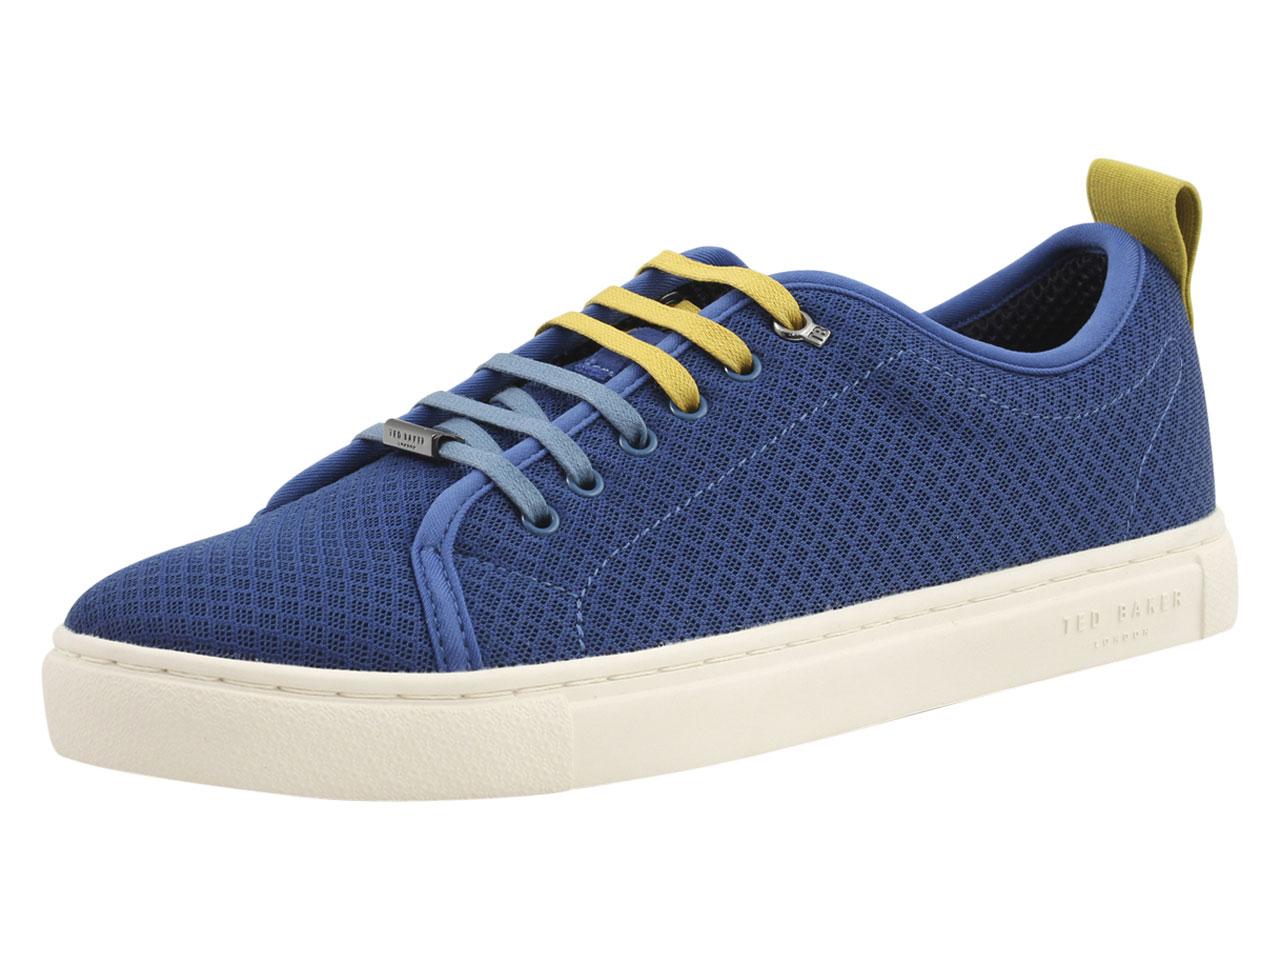 Ted Baker Men's Lannse Fashion Sneakers Shoes - Blue - 12 D(M) US